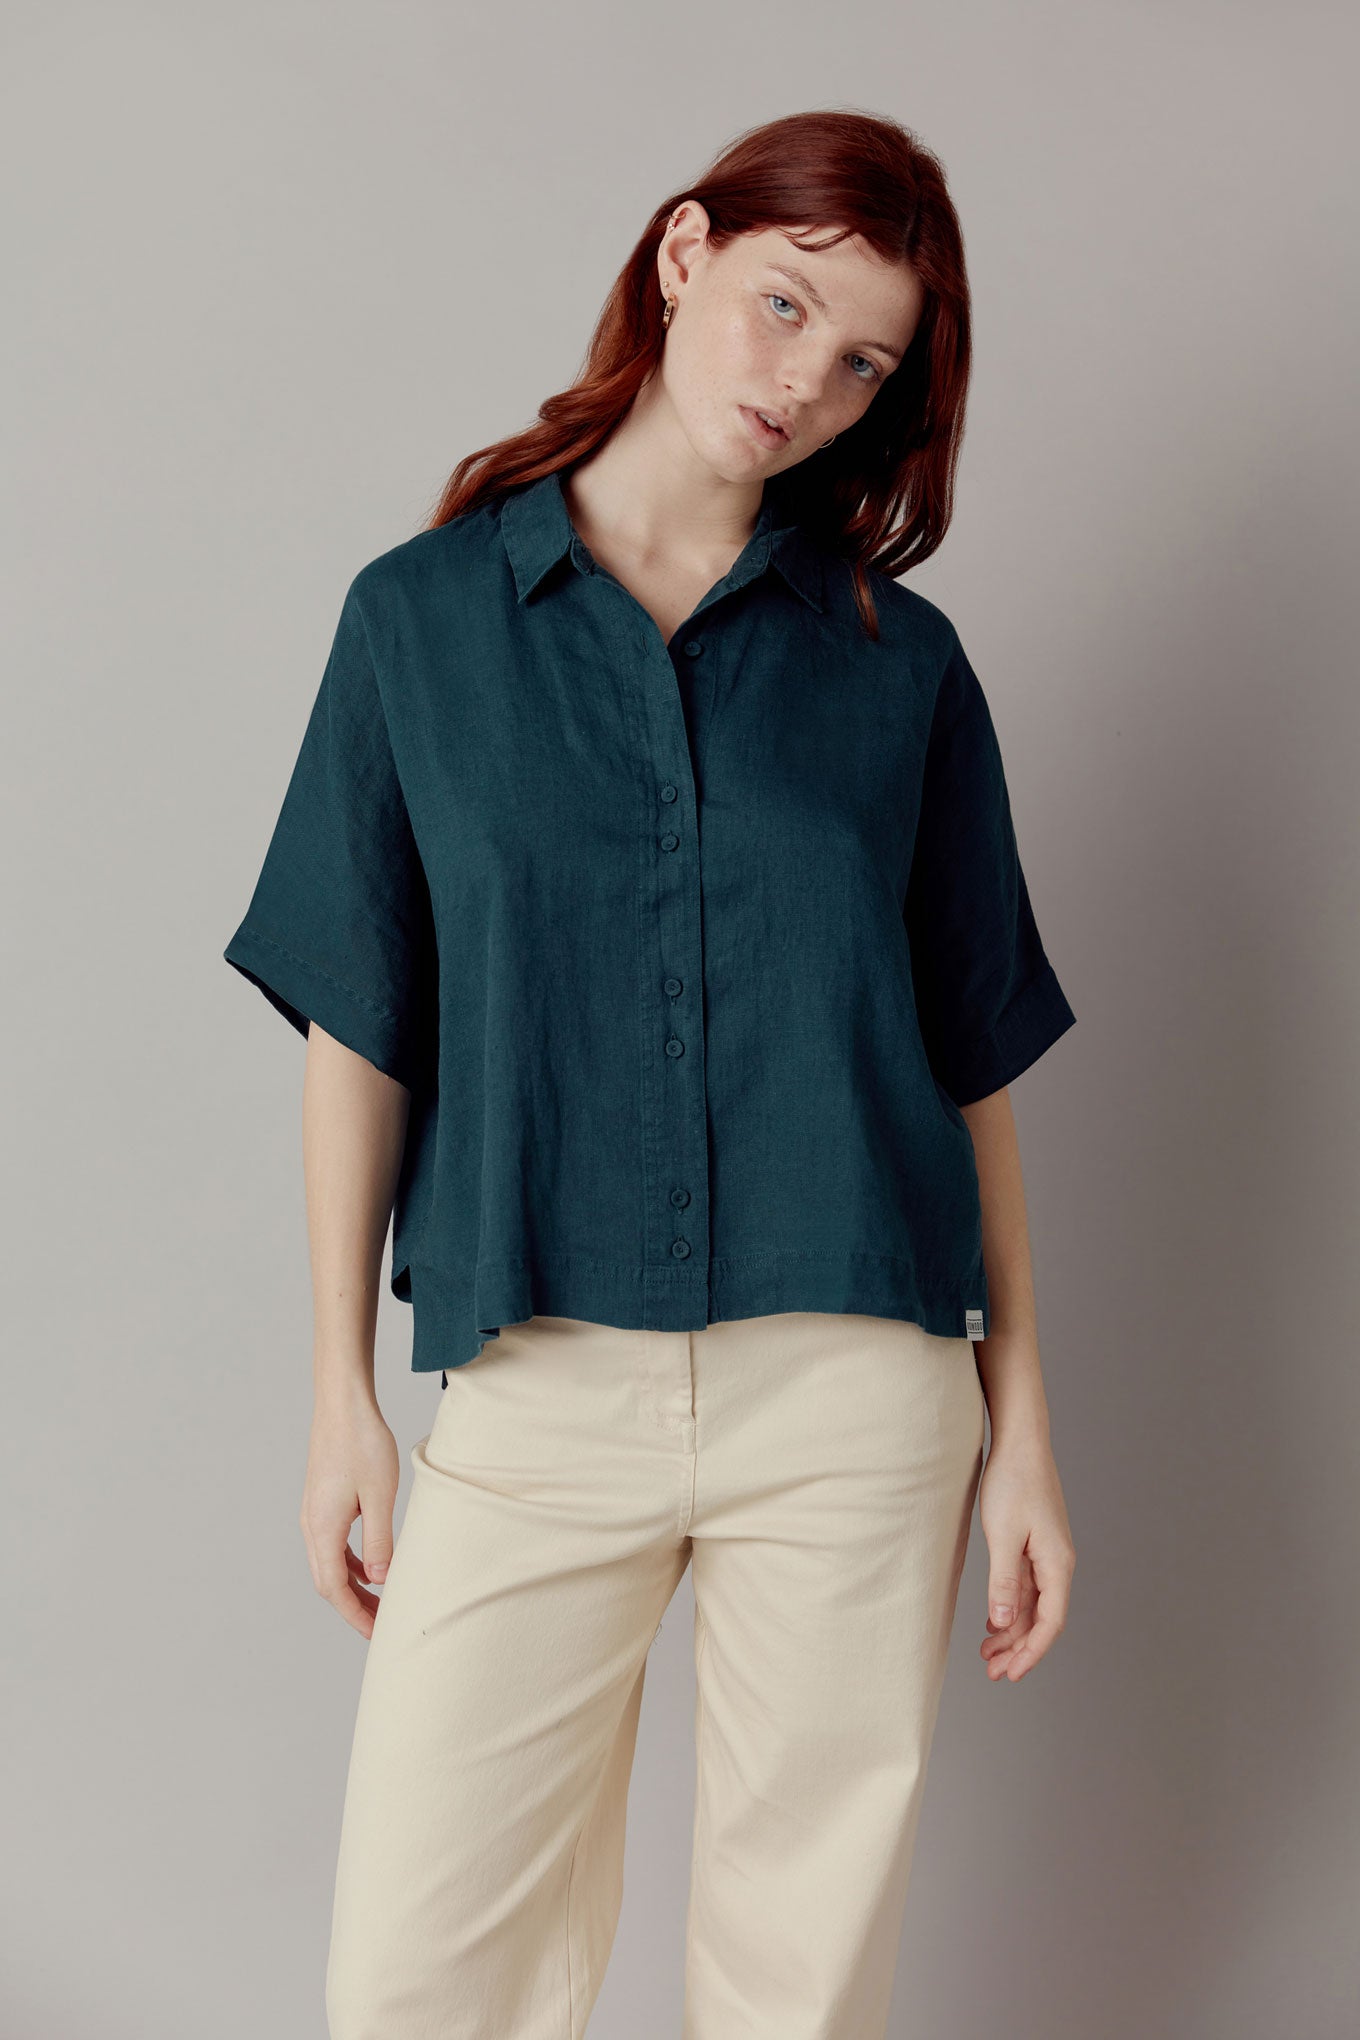 KIMONO Organic Linen Shirt - Teal Green, Size 1/ UK 8/ EUR 36